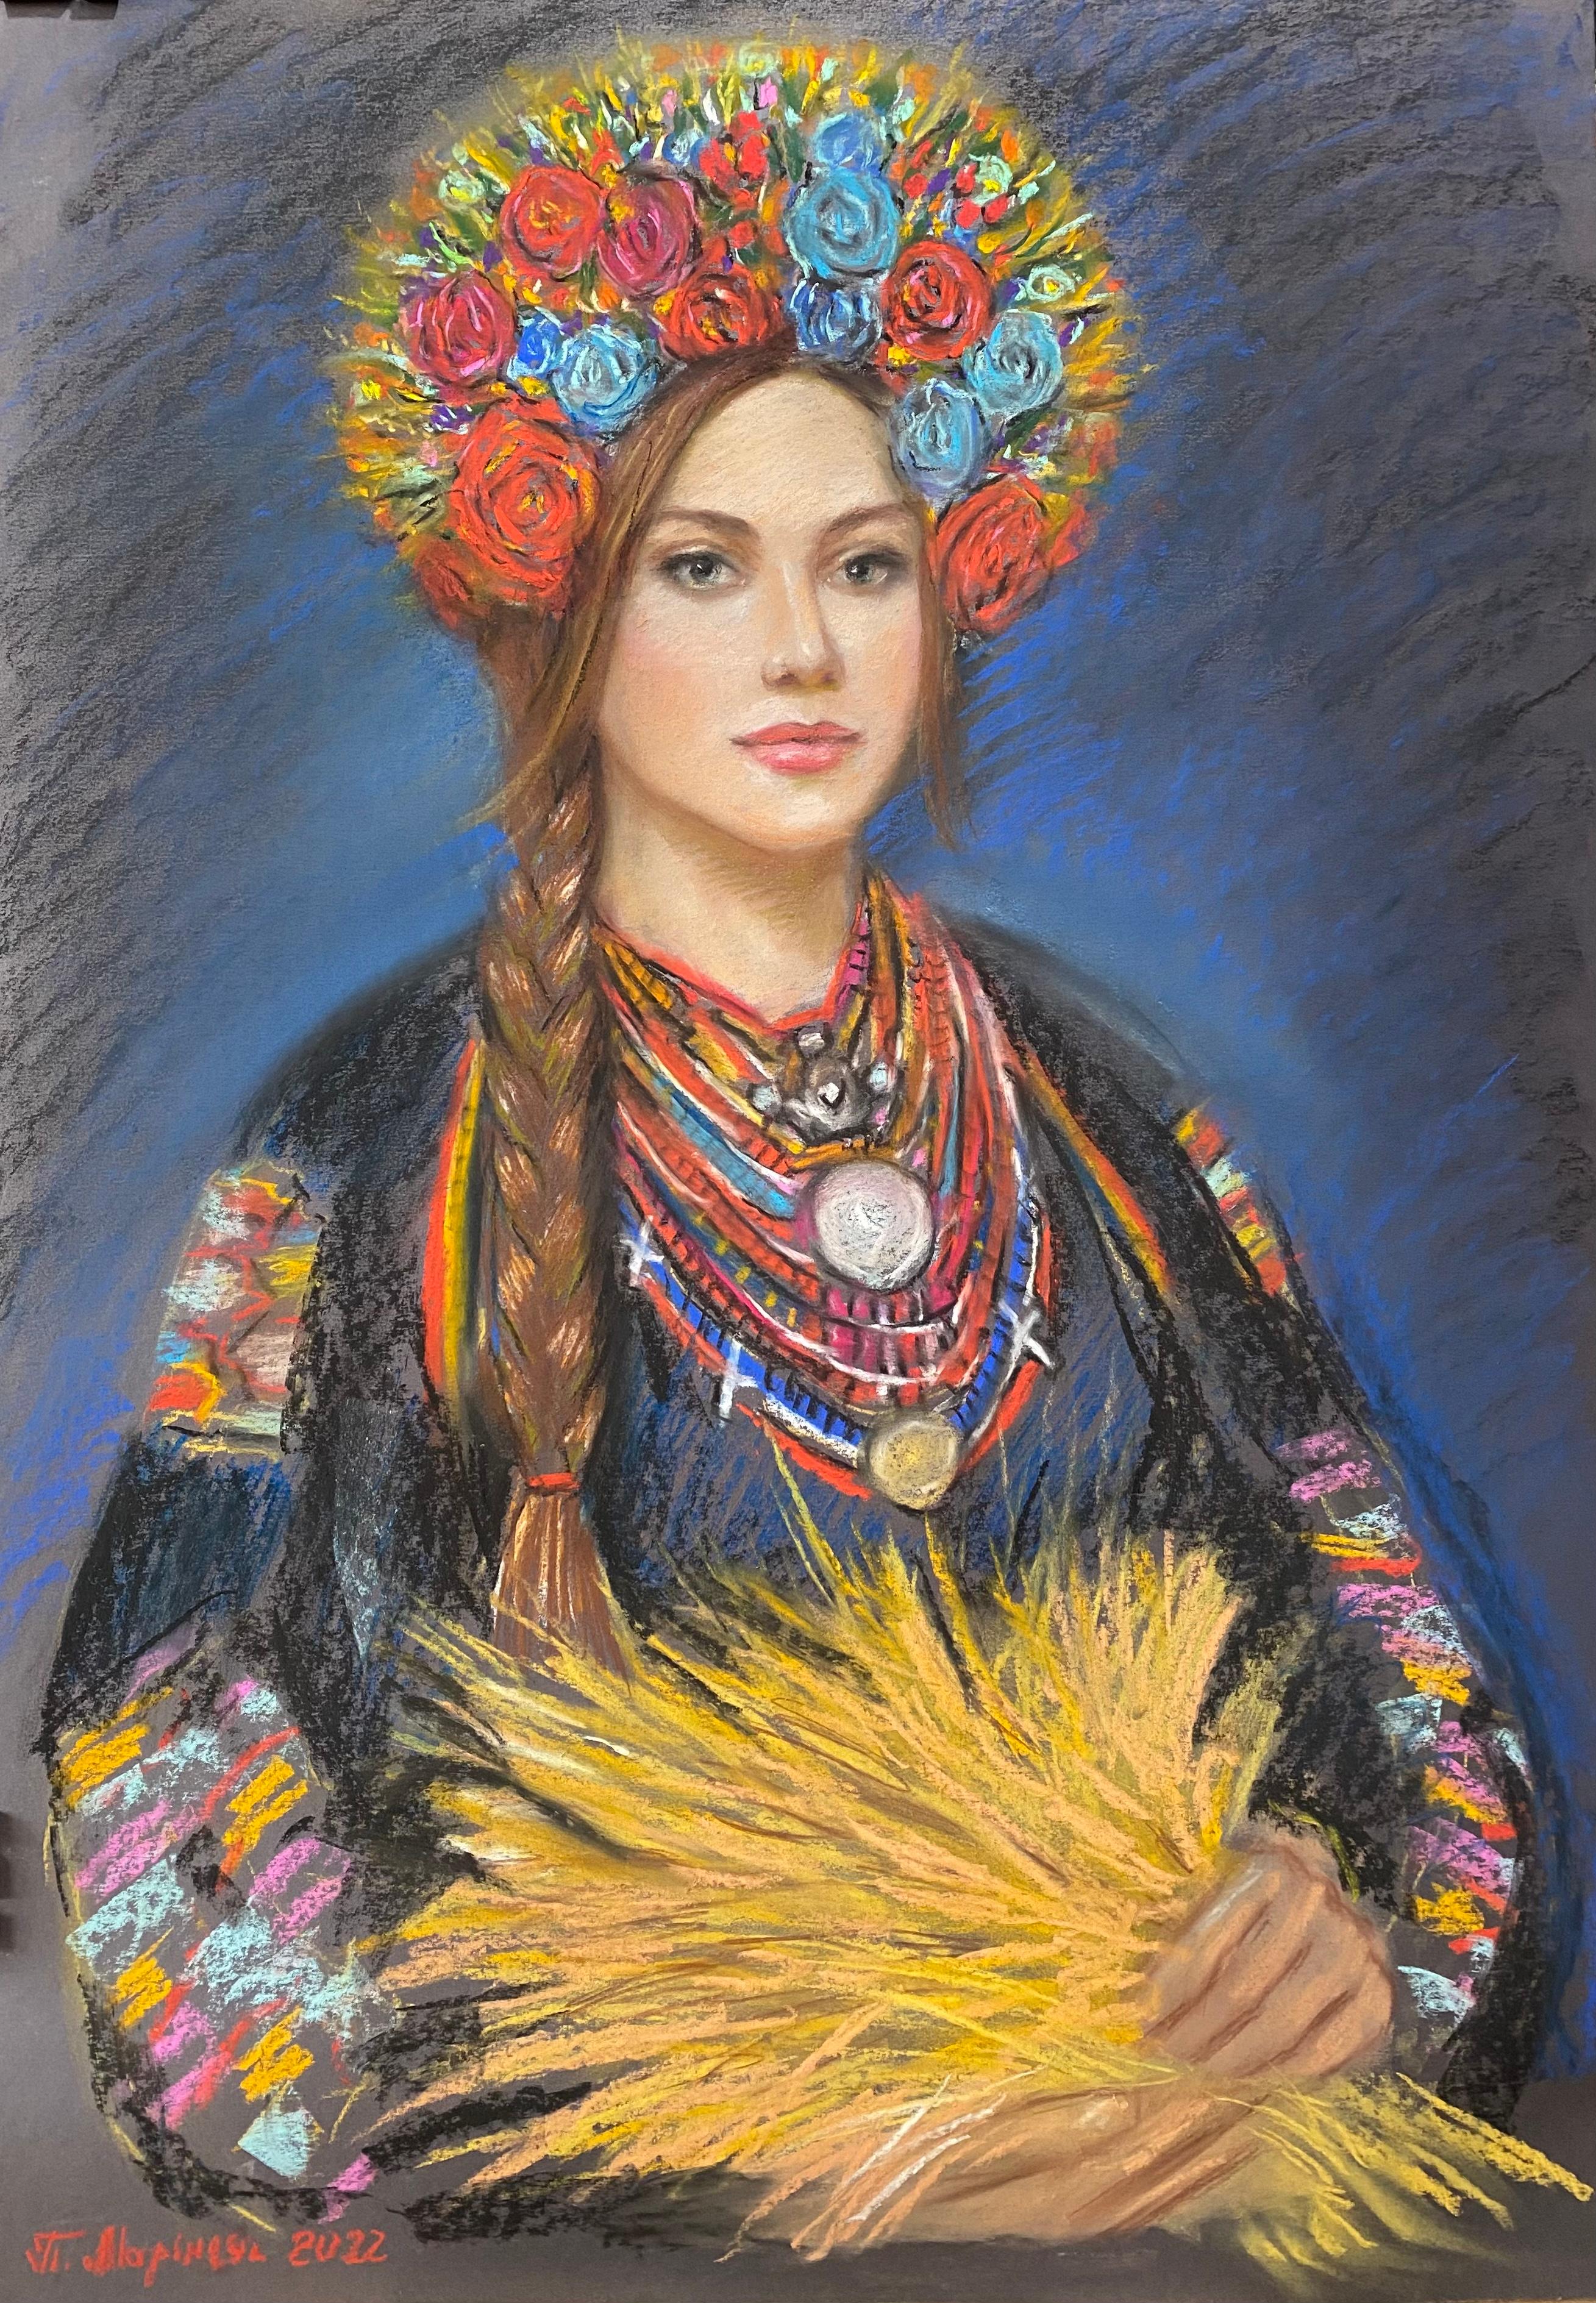 Ukrainian woman